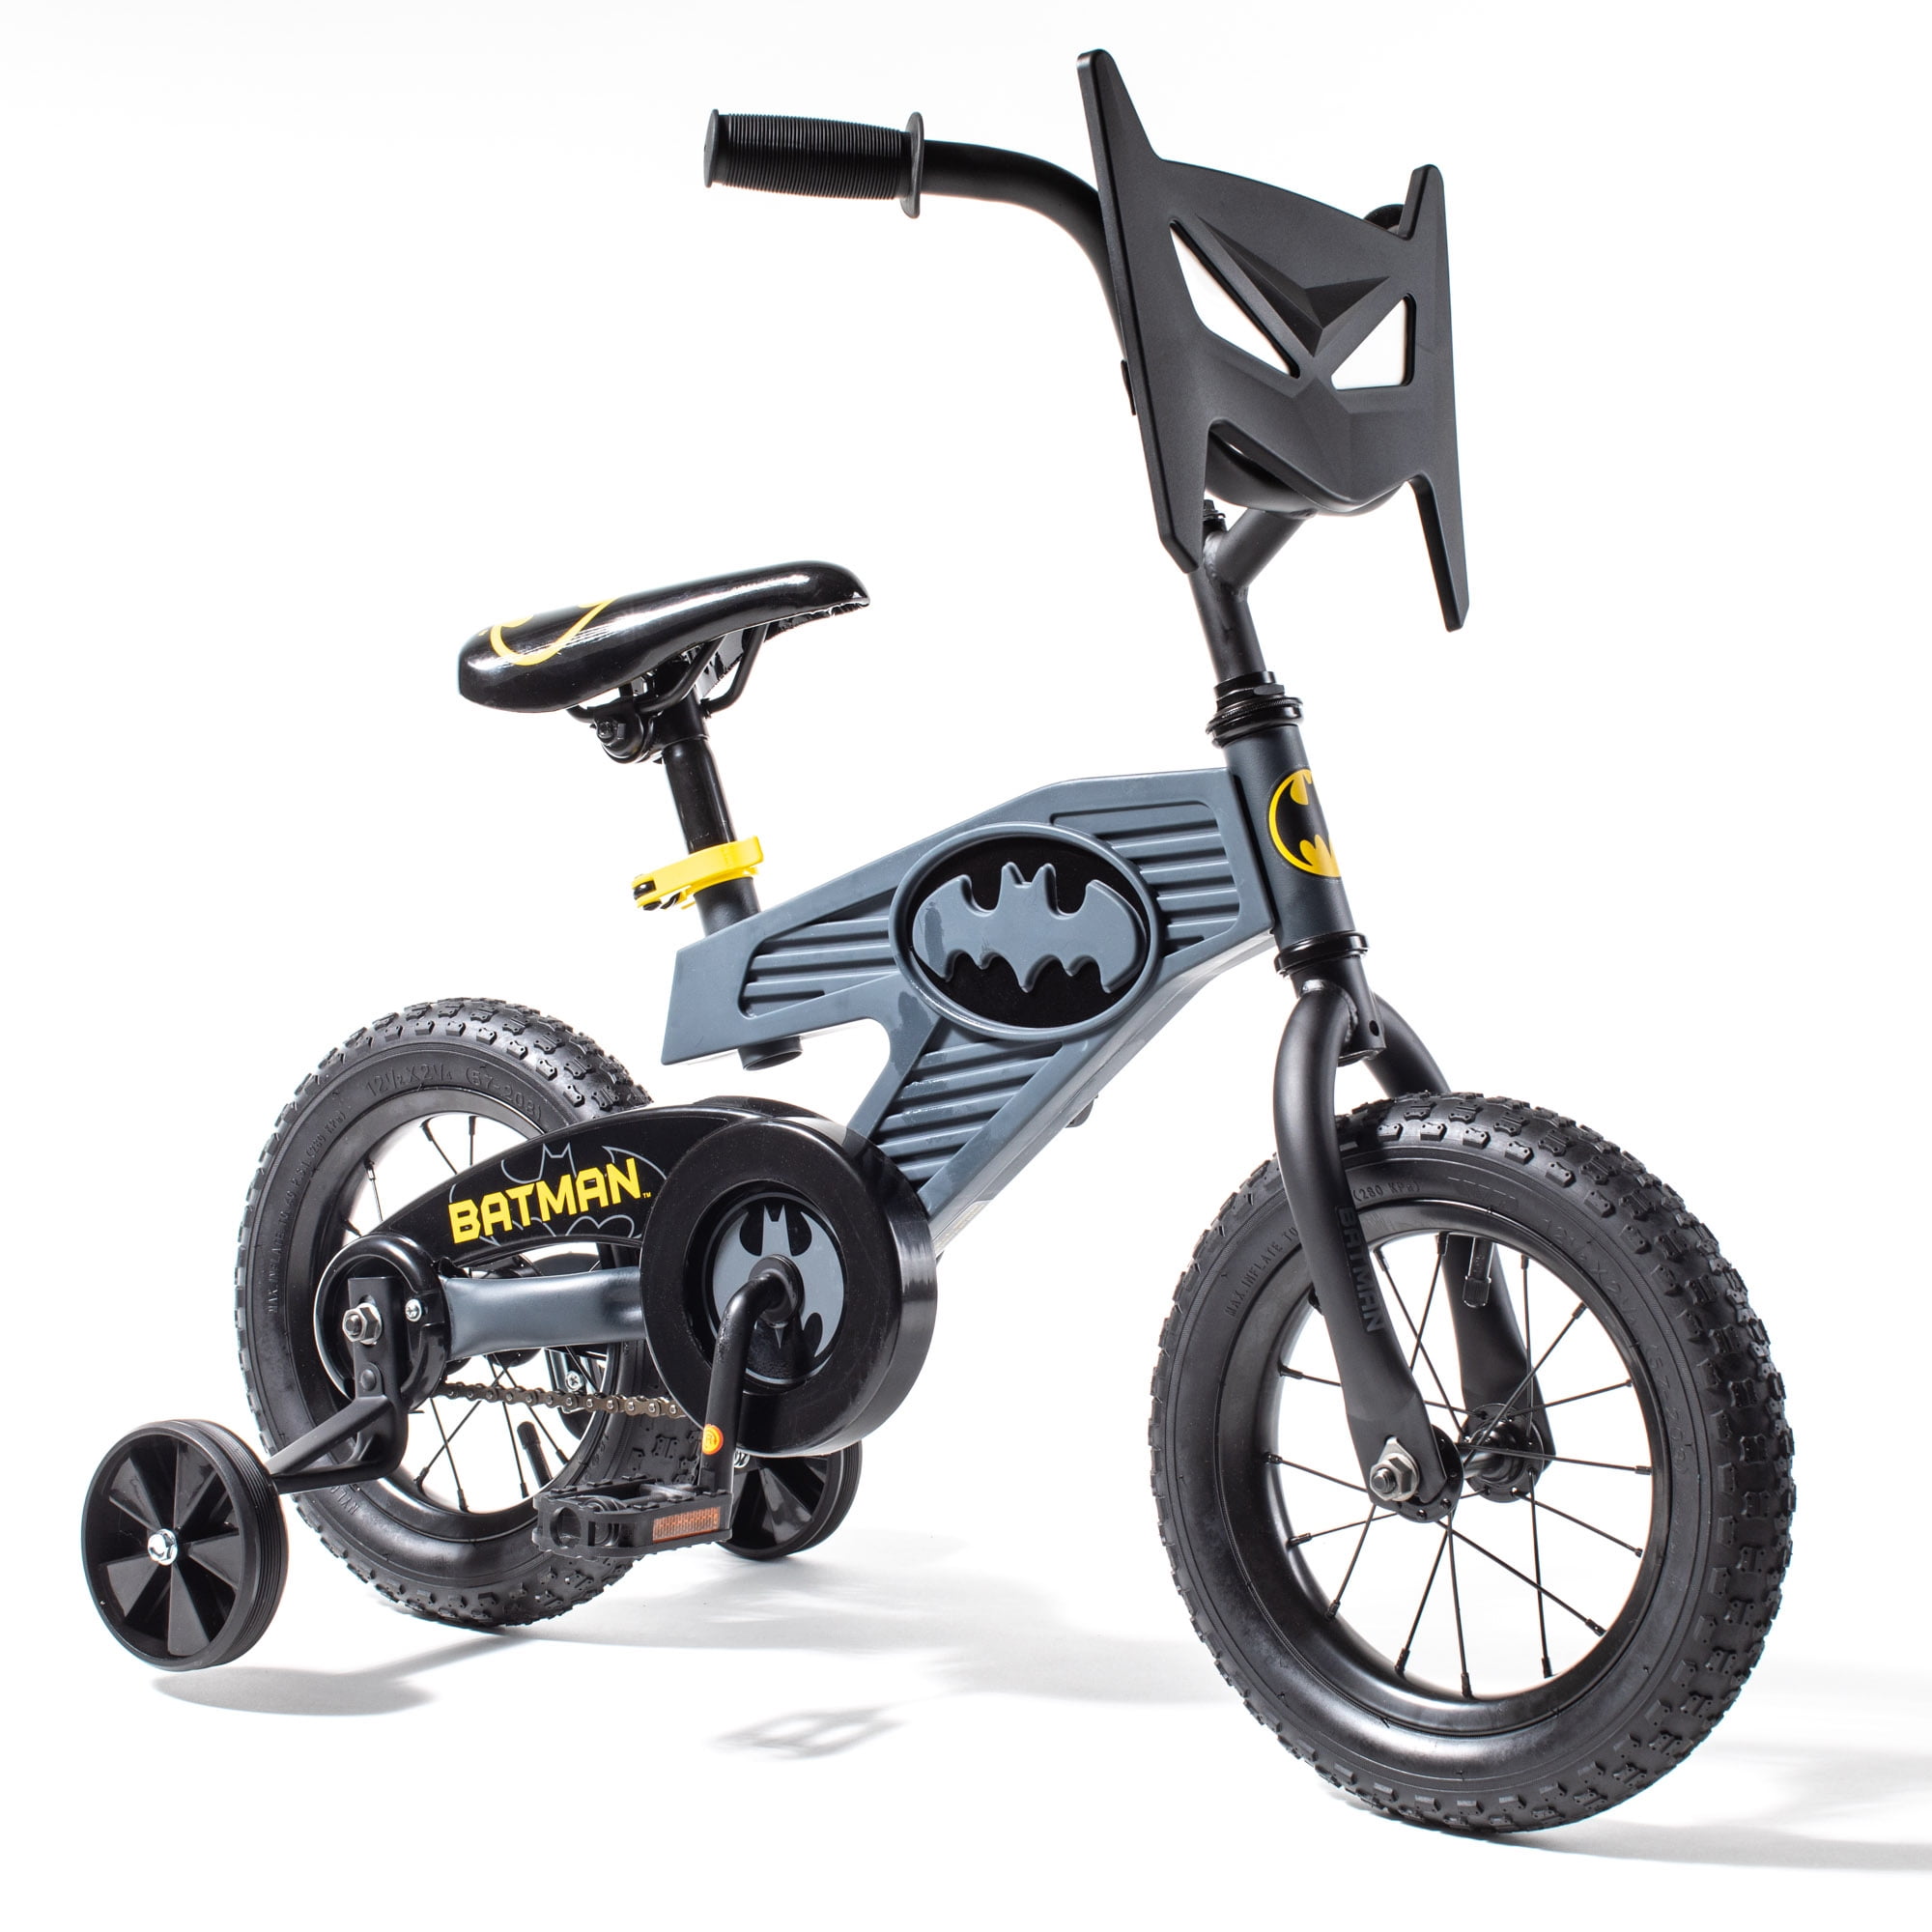 16 inch batman bicycle